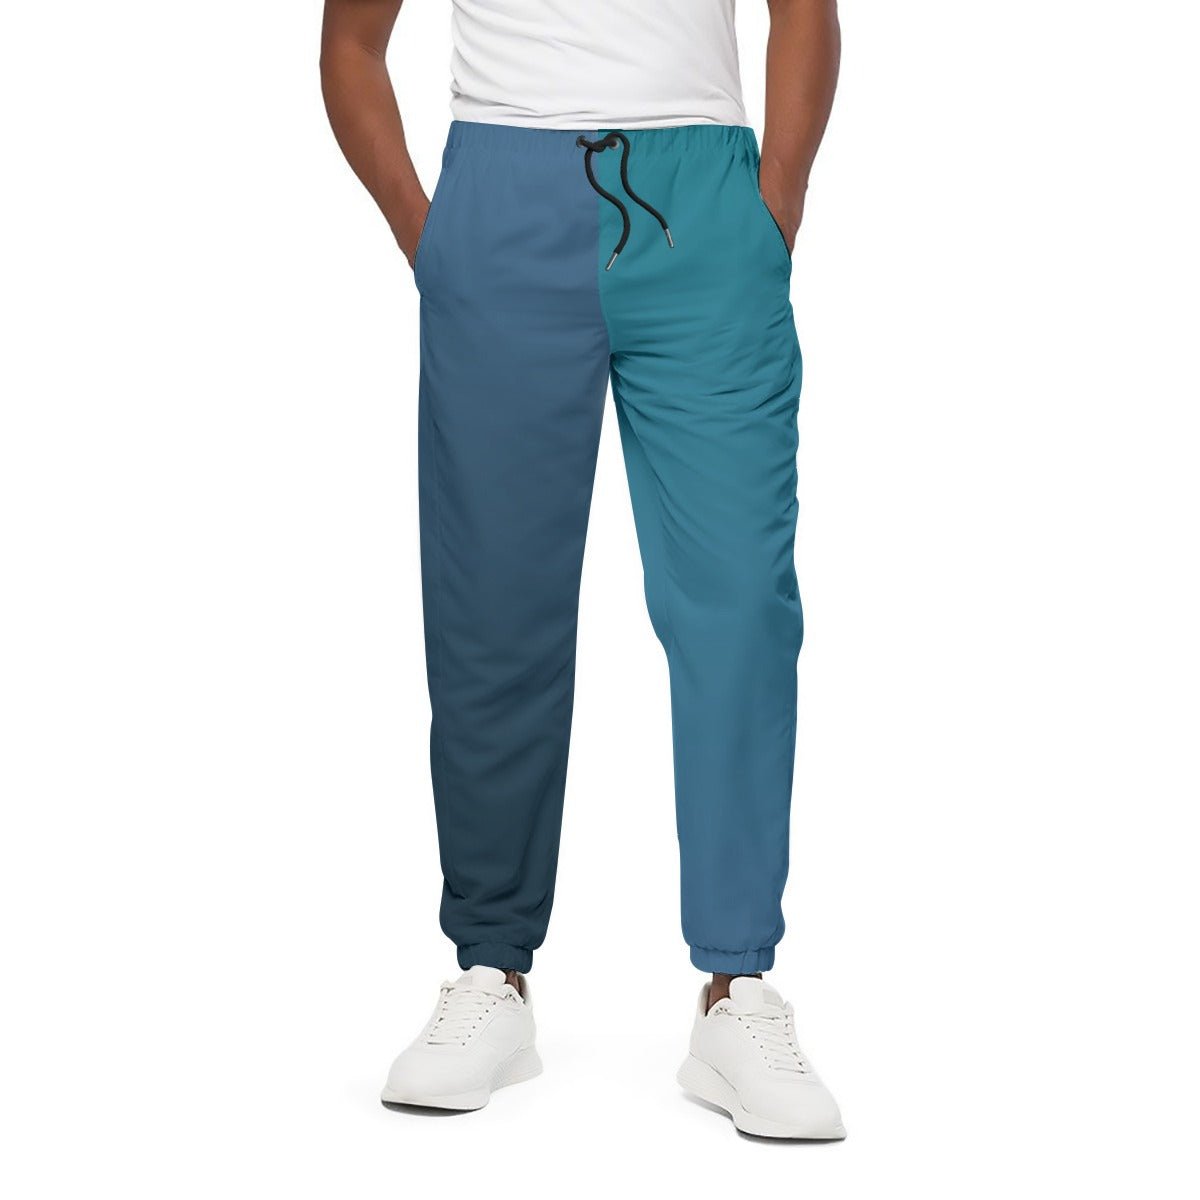 Blue Two-Tone Sweatpants | Pants | All Around Artsy Fashion